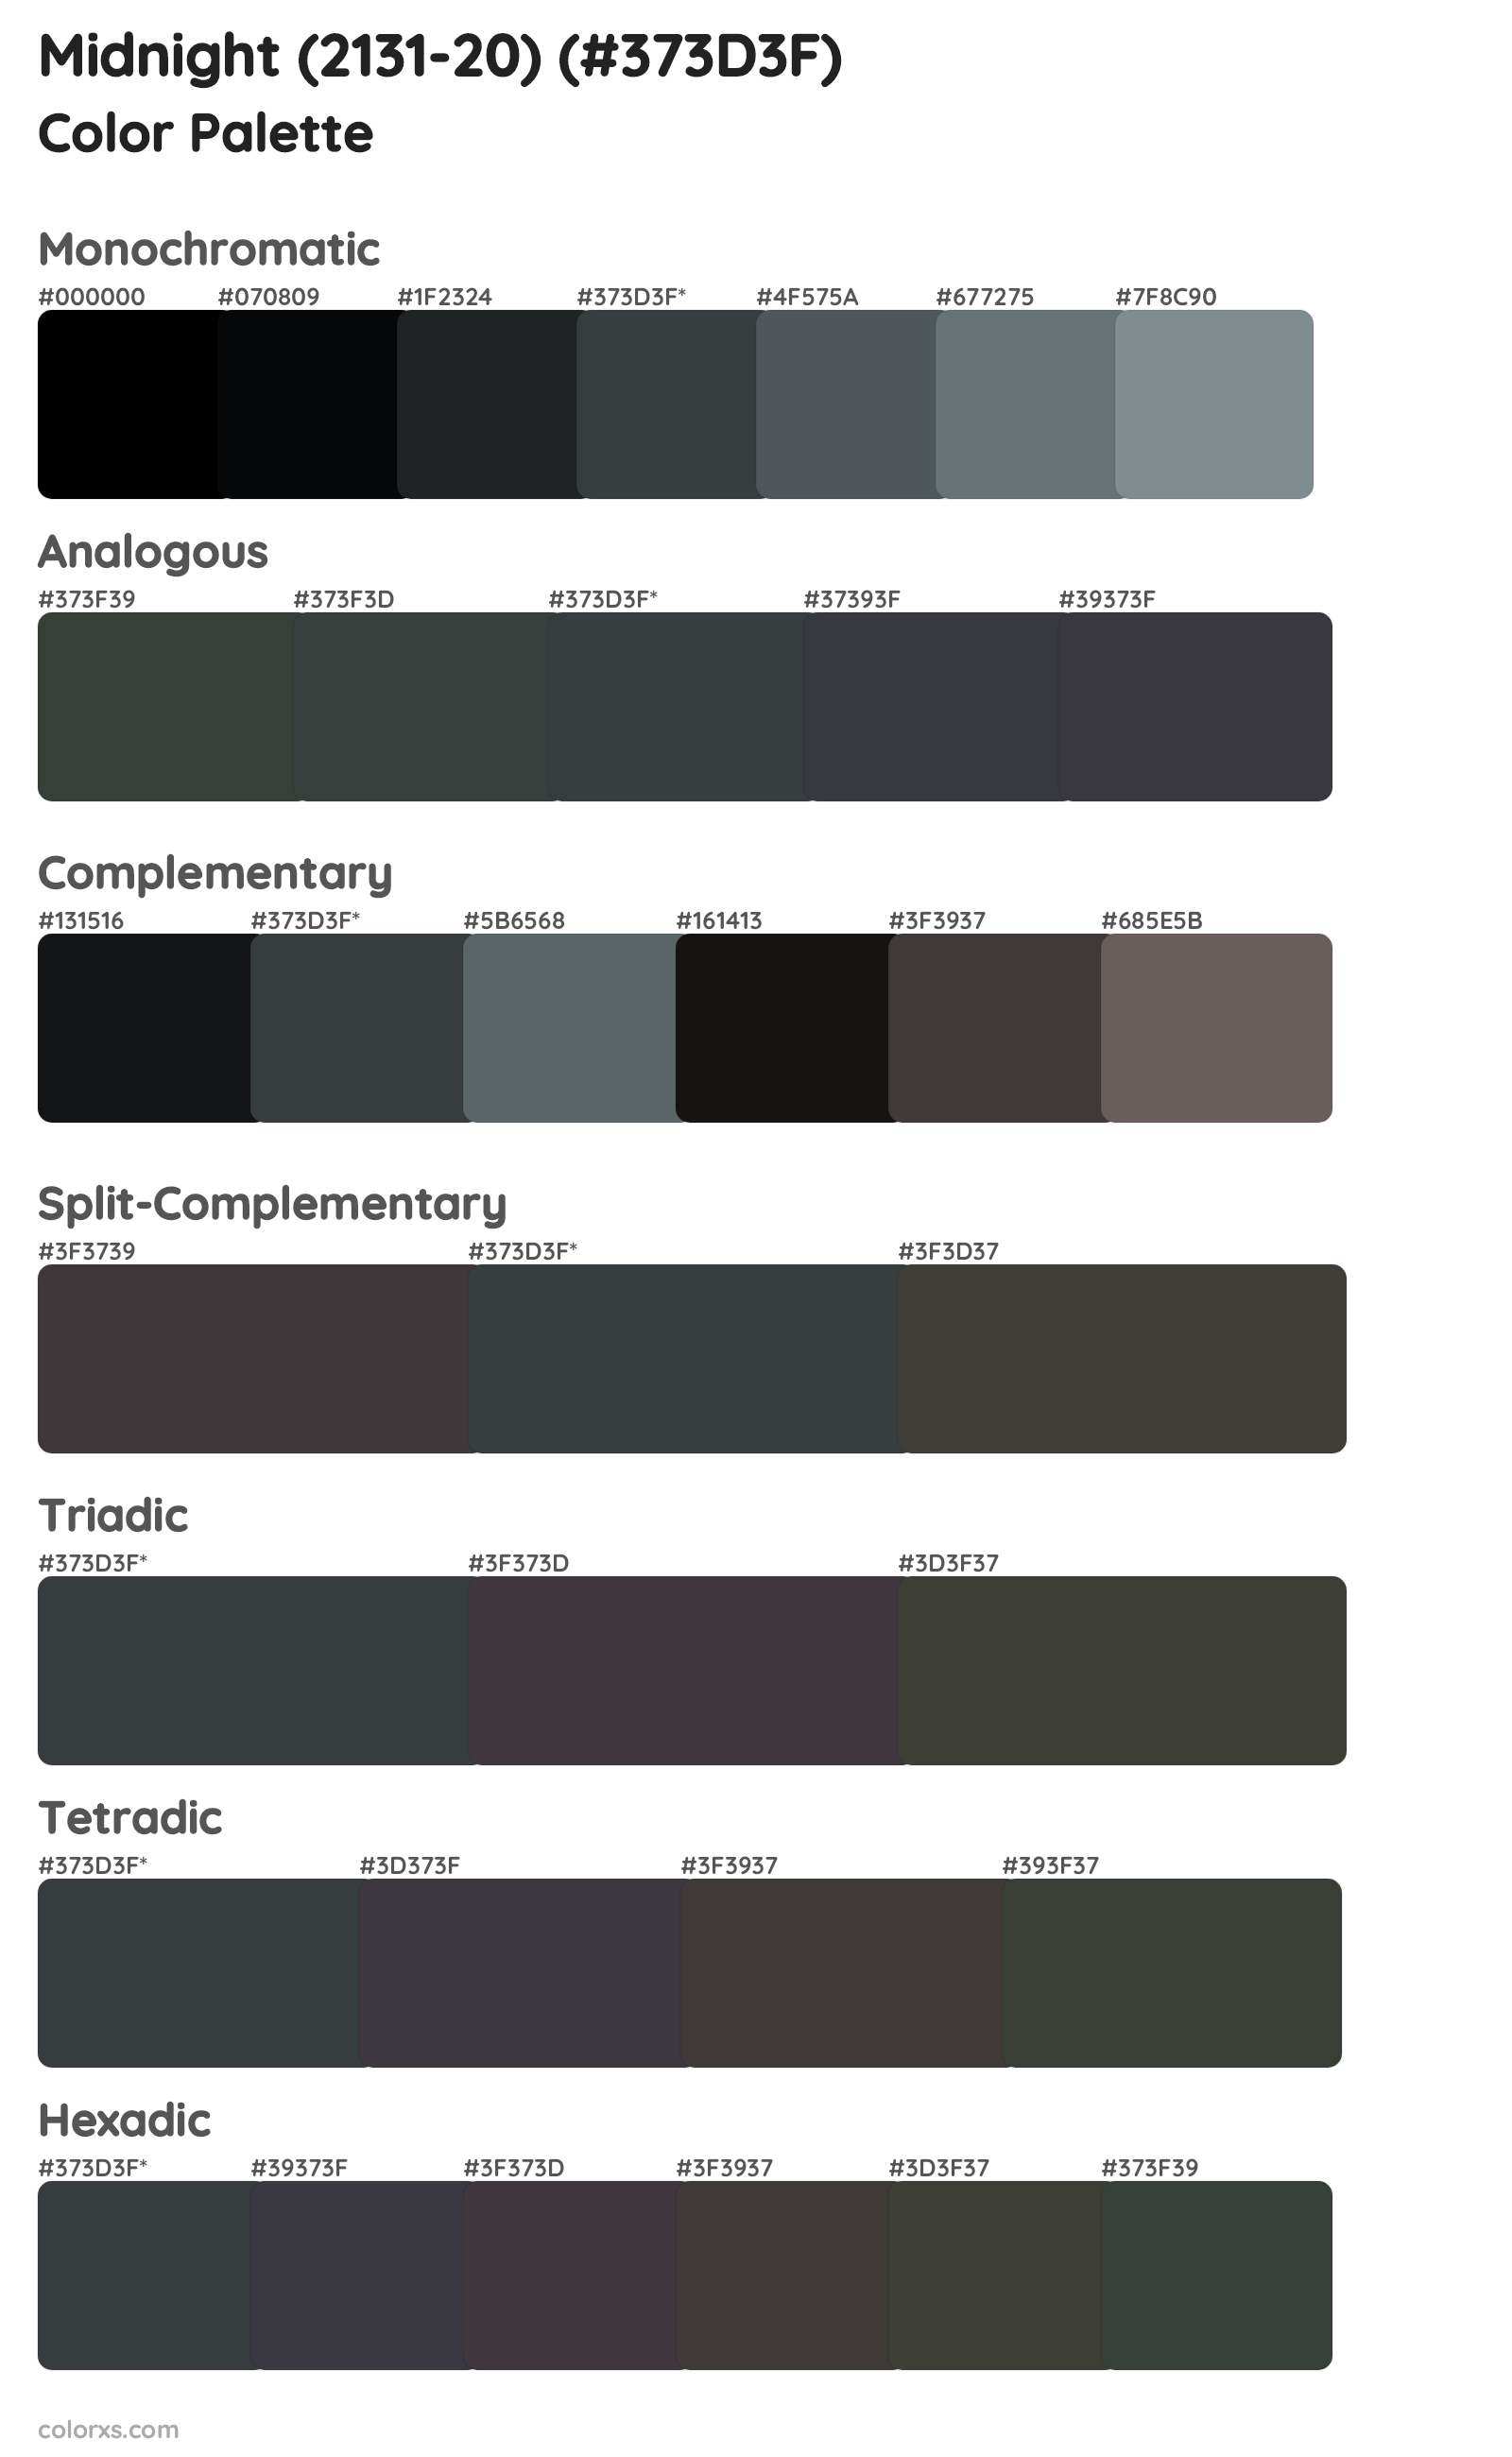 Midnight (2131-20) Color Scheme Palettes